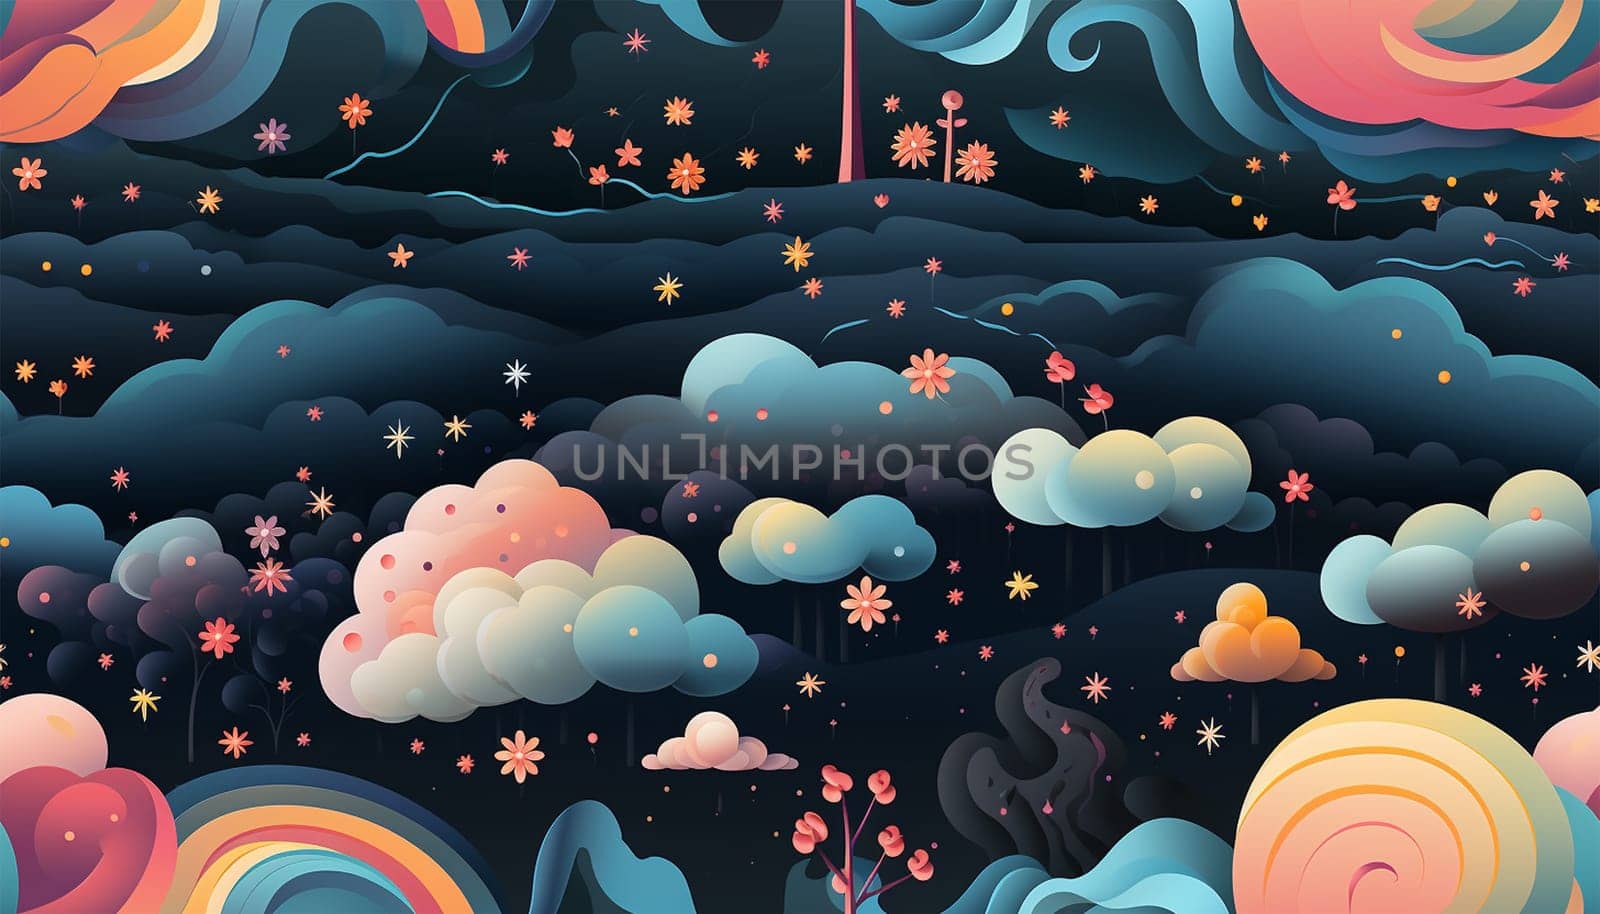 Unicorn design pattern landscape fantasy. Seamless kids princess style and unicorn illustration background pattern by Annebel146